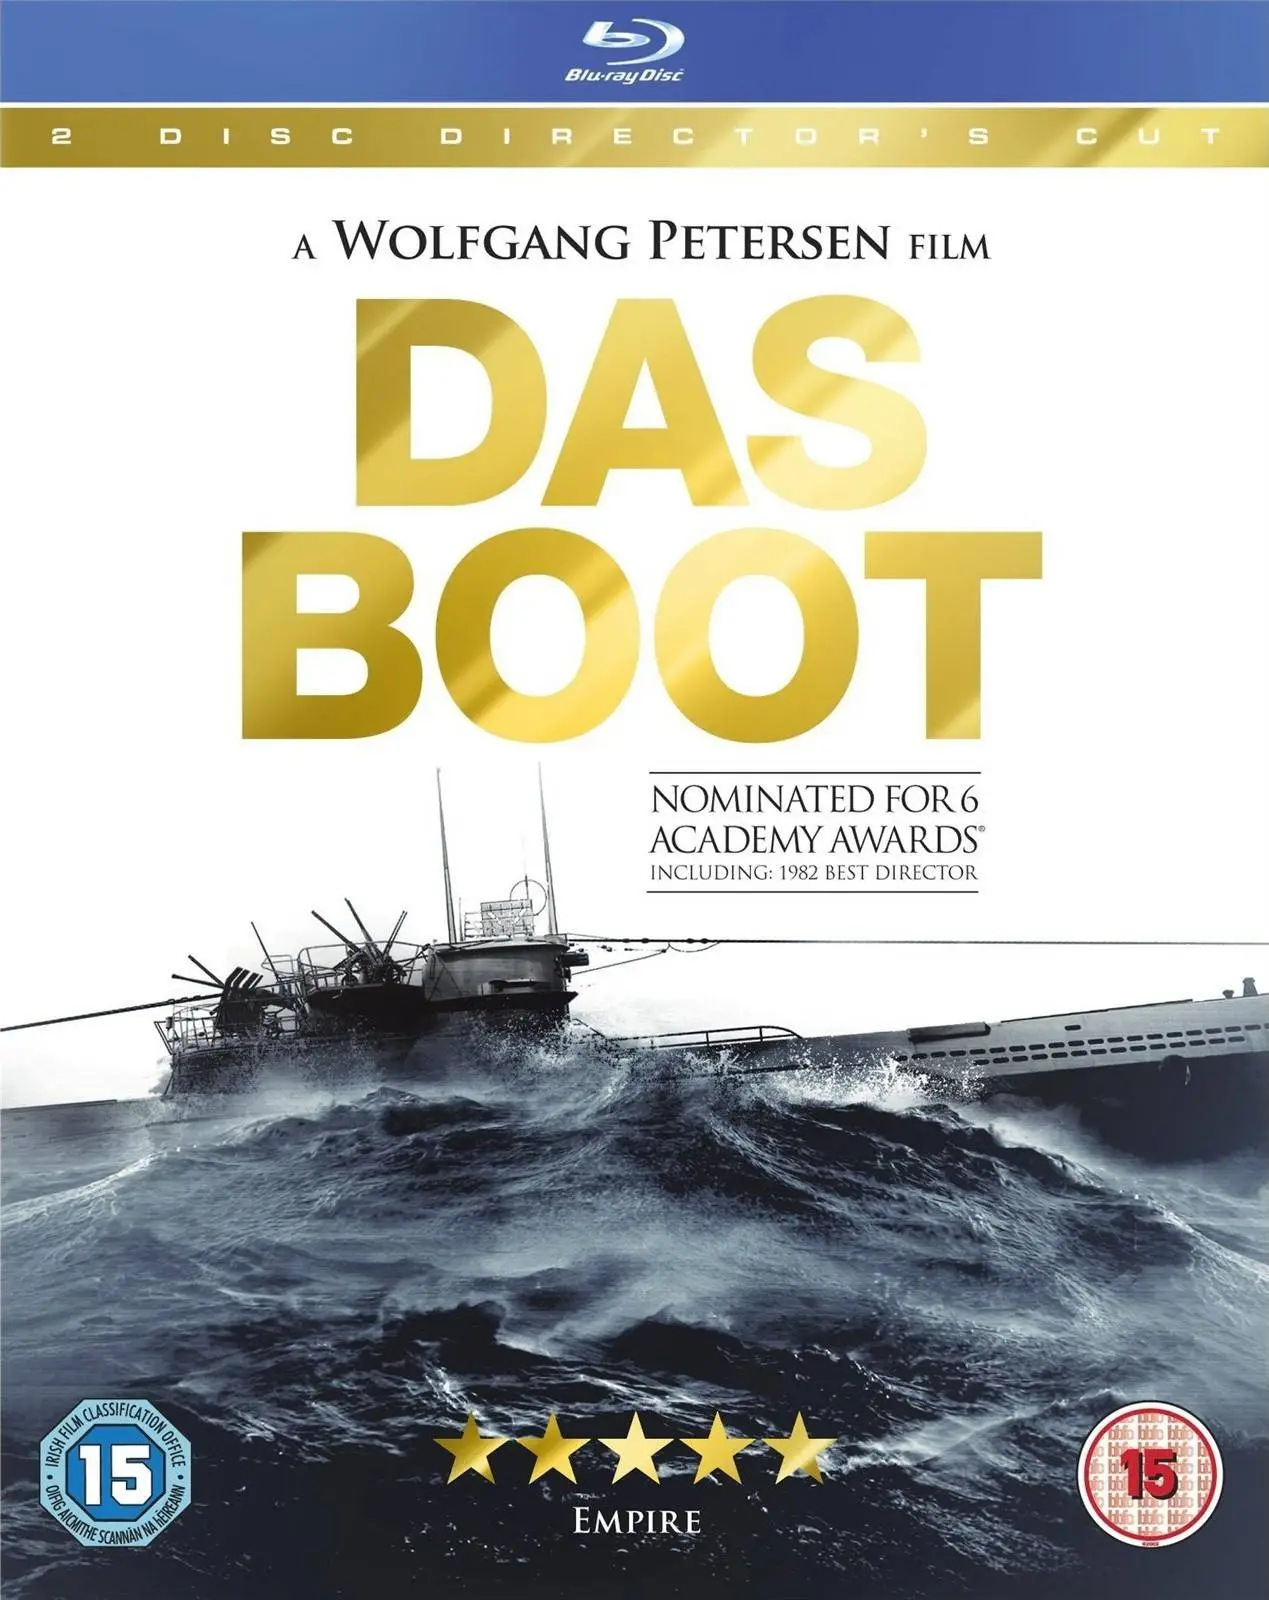 Das Boot (1981) [Director's Cut] / AvaxHome